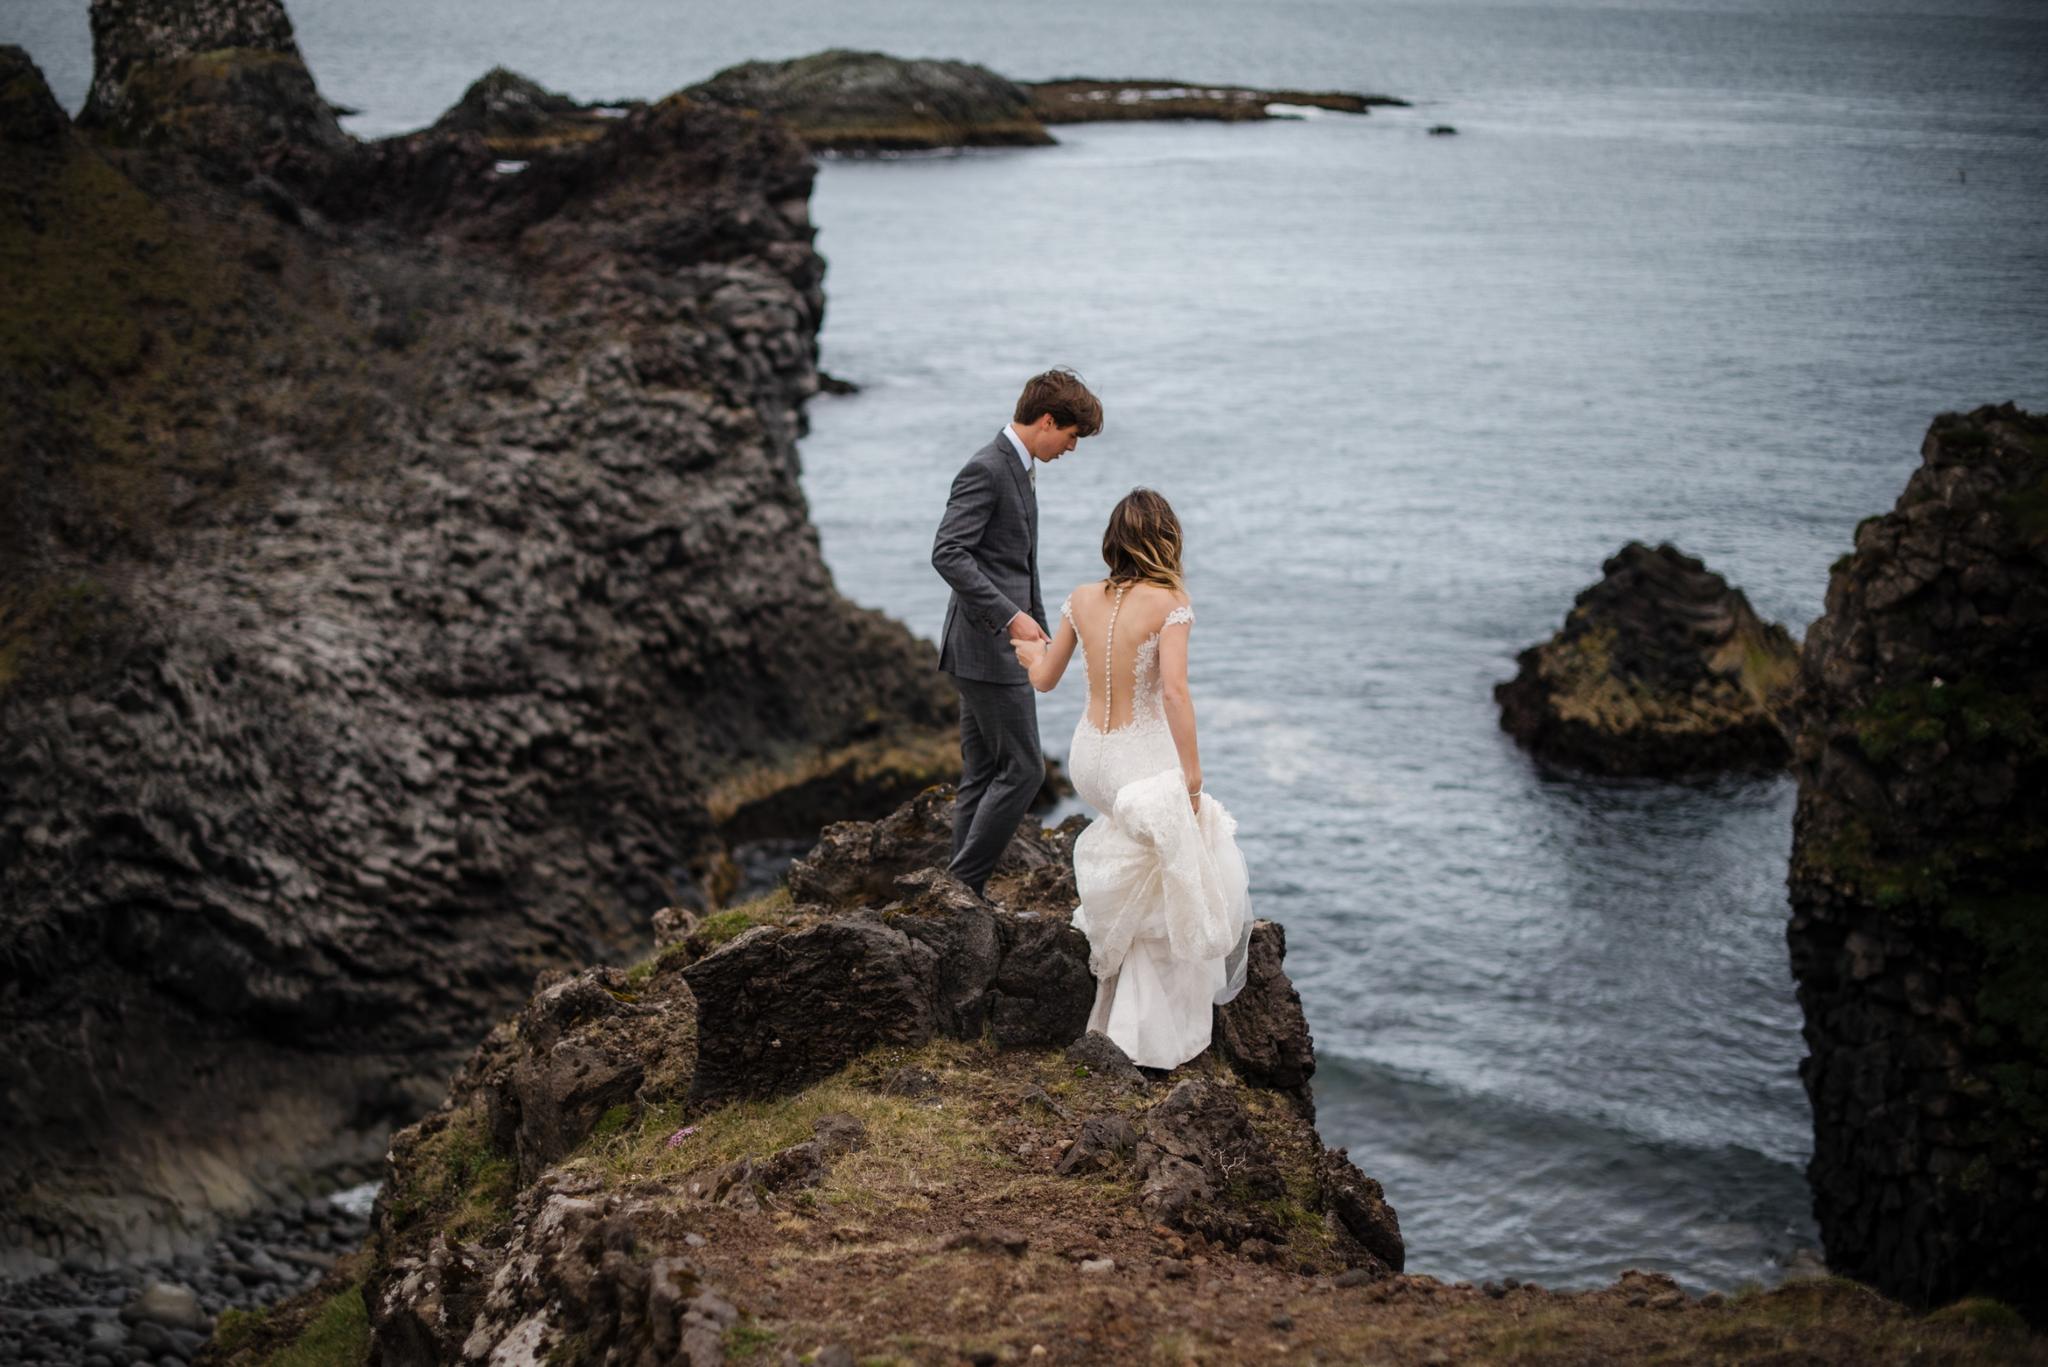 A Dreamy Destination Wedding in Iceland: The Little Black Church